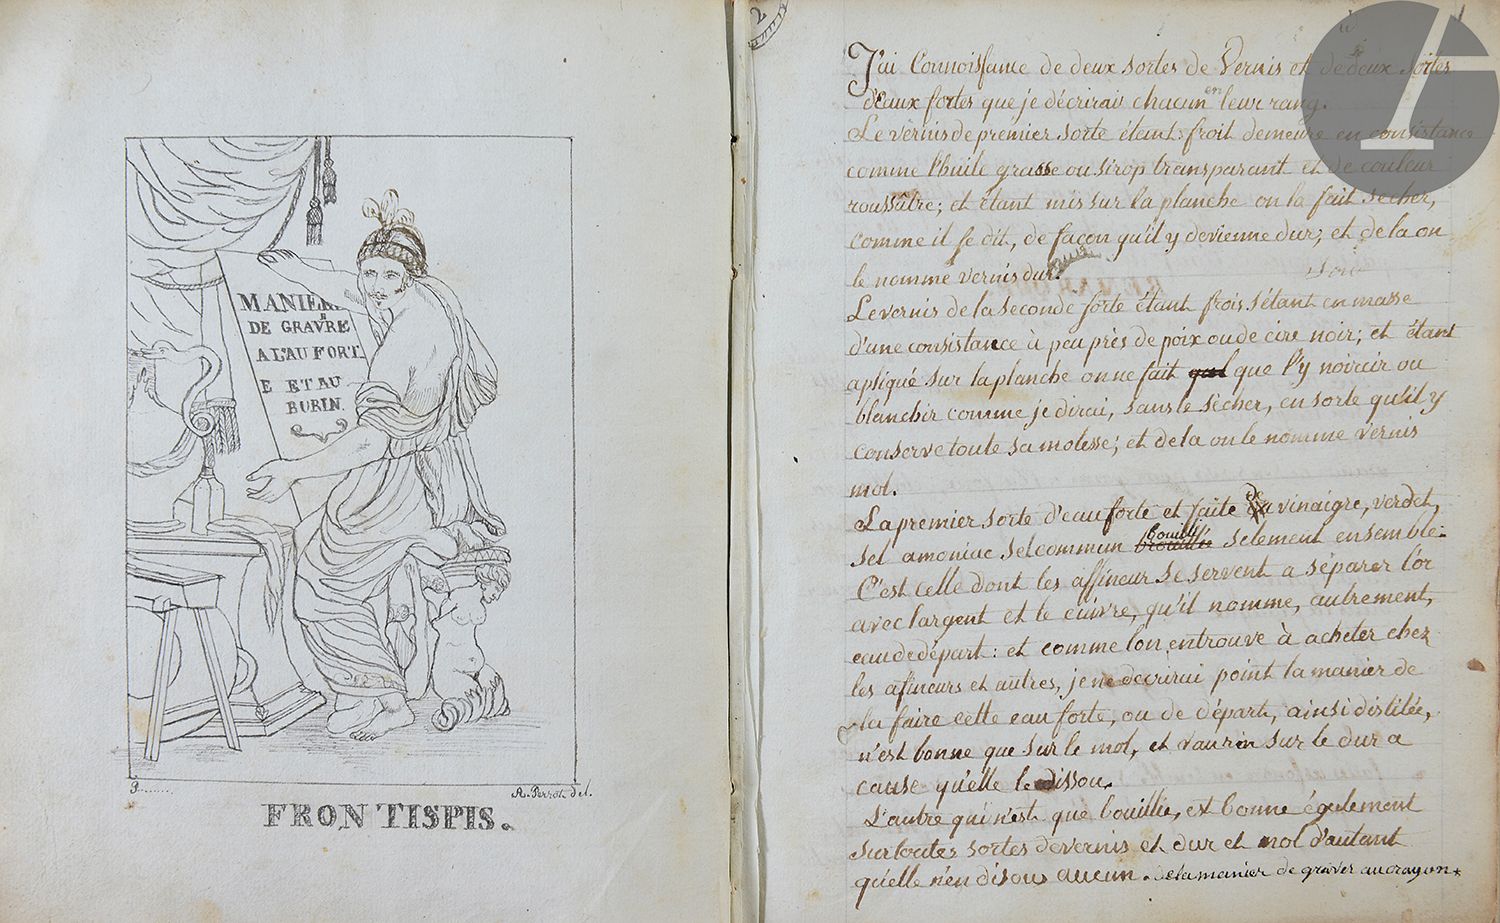 Null [PERROT]。[ENGRAVING].用au[sic]forte和burin进行雕刻的手册。
法语，纸上手稿。
法国，s.D.，约1795.

F&hellip;